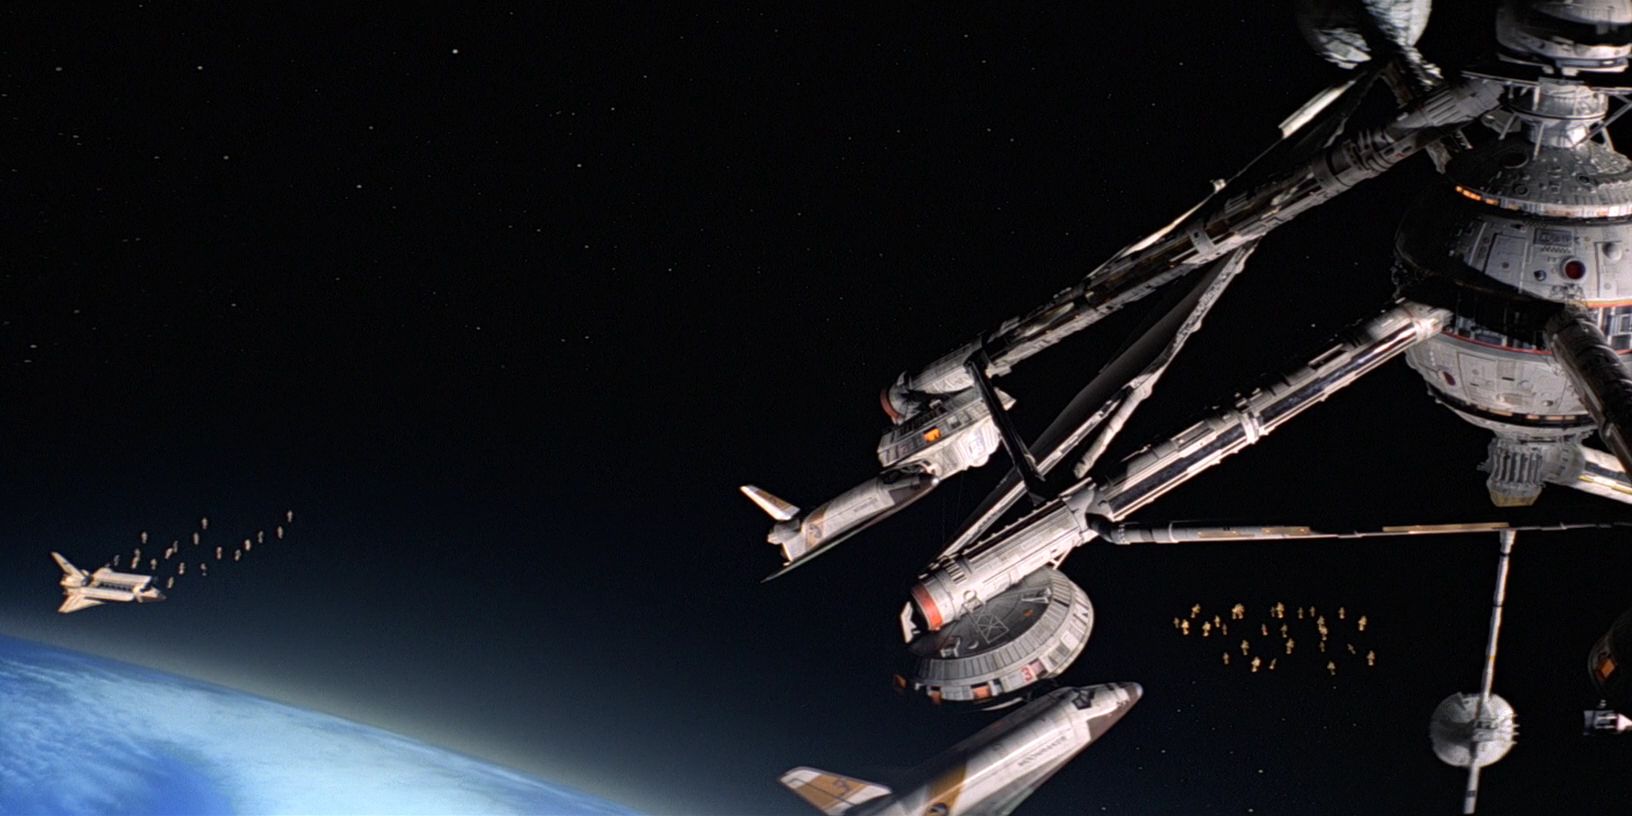 James Bond: Moonraker space station